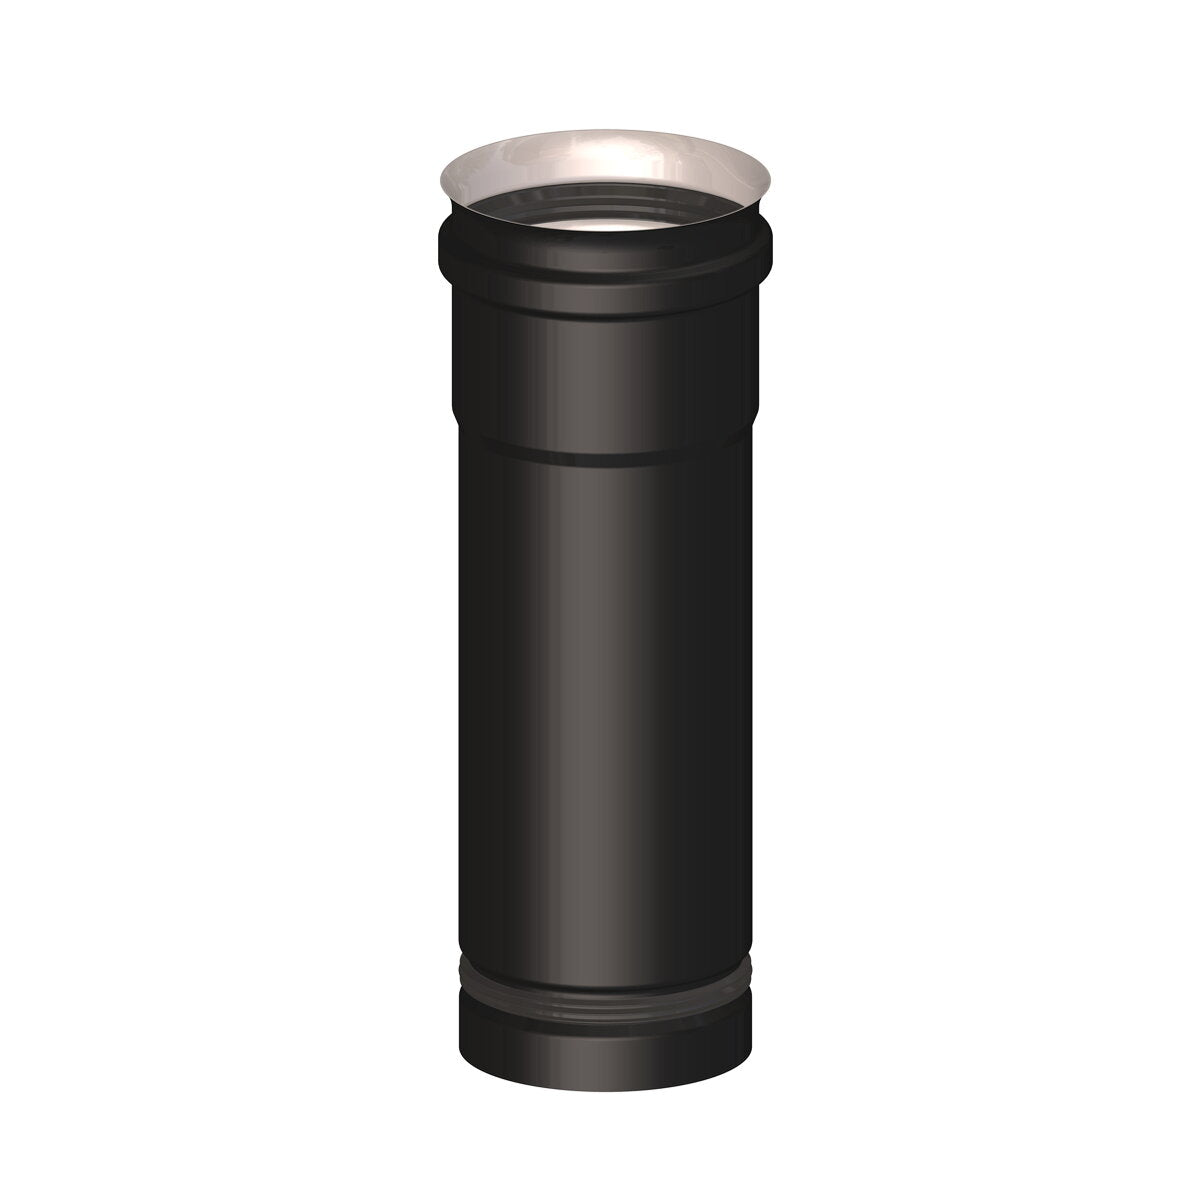 Telescopic element M/F diam. 80 mm for pellet stove and pellet boiler fumes outlet